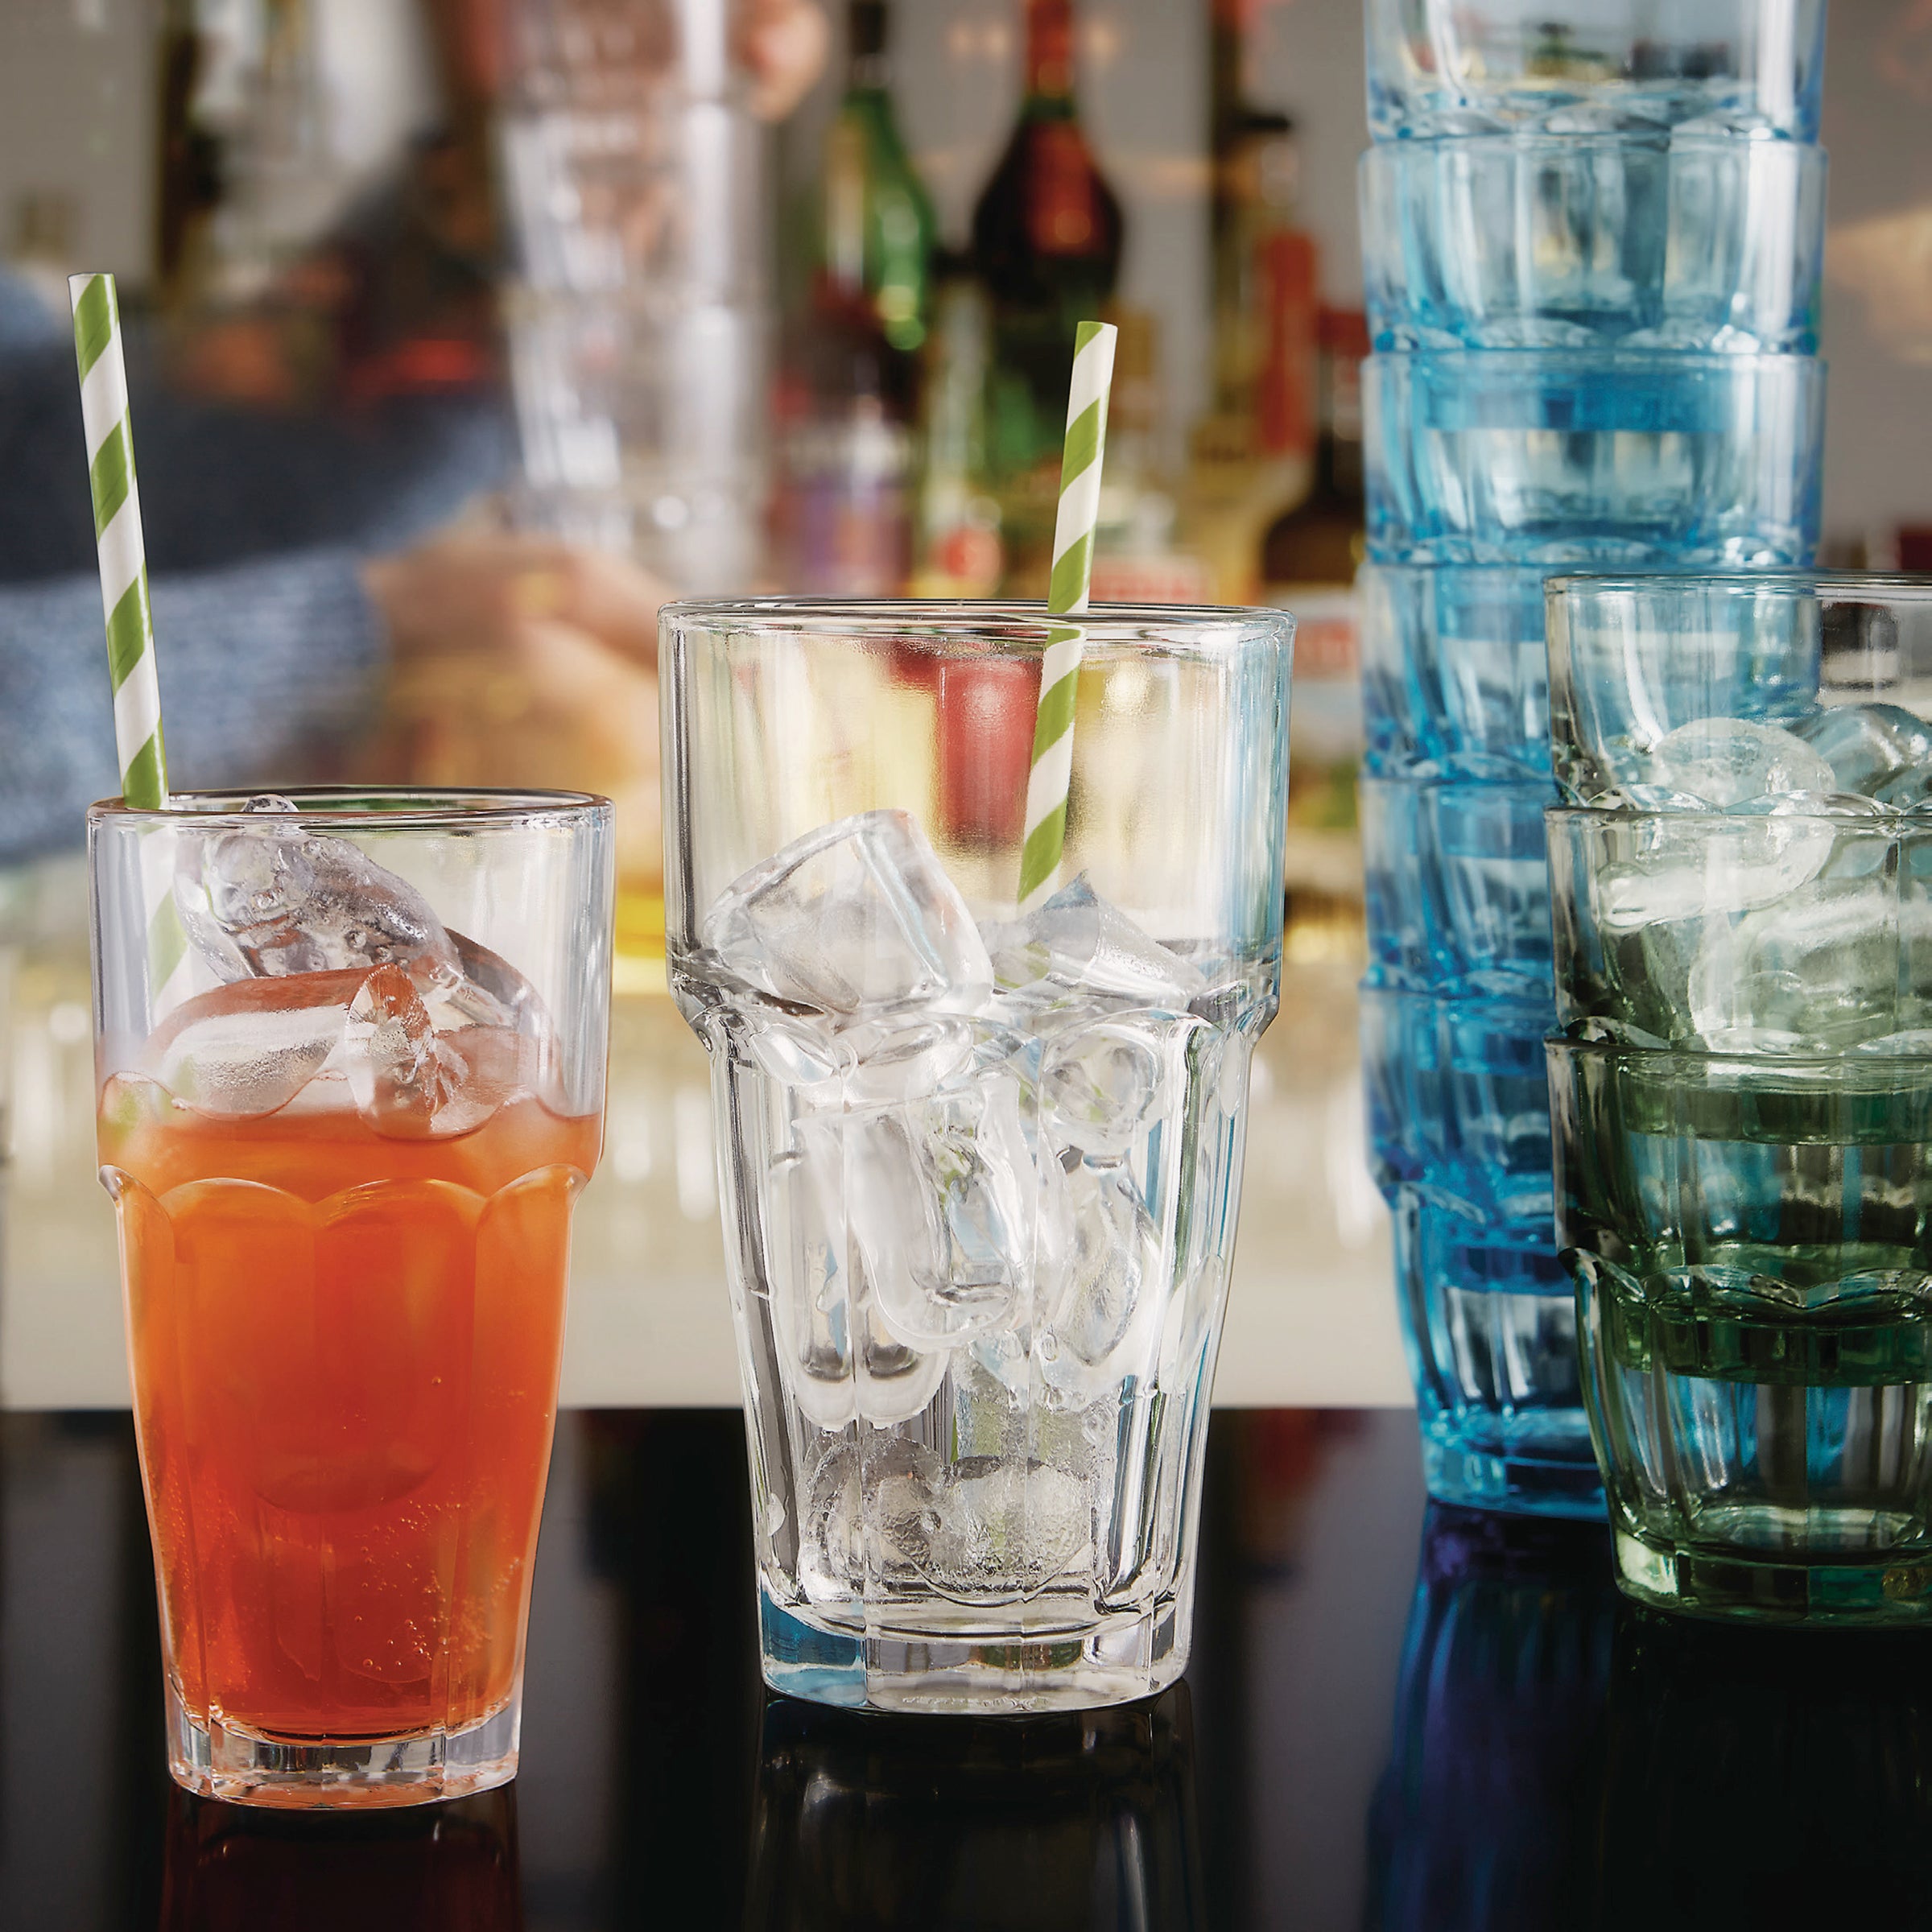 Combler Cocktail Glasses, Rocks Whiskey Glasses, 9oz Drinking Glasses Set  of 4, Ribbed Glassware Set…See more Combler Cocktail Glasses, Rocks Whiskey